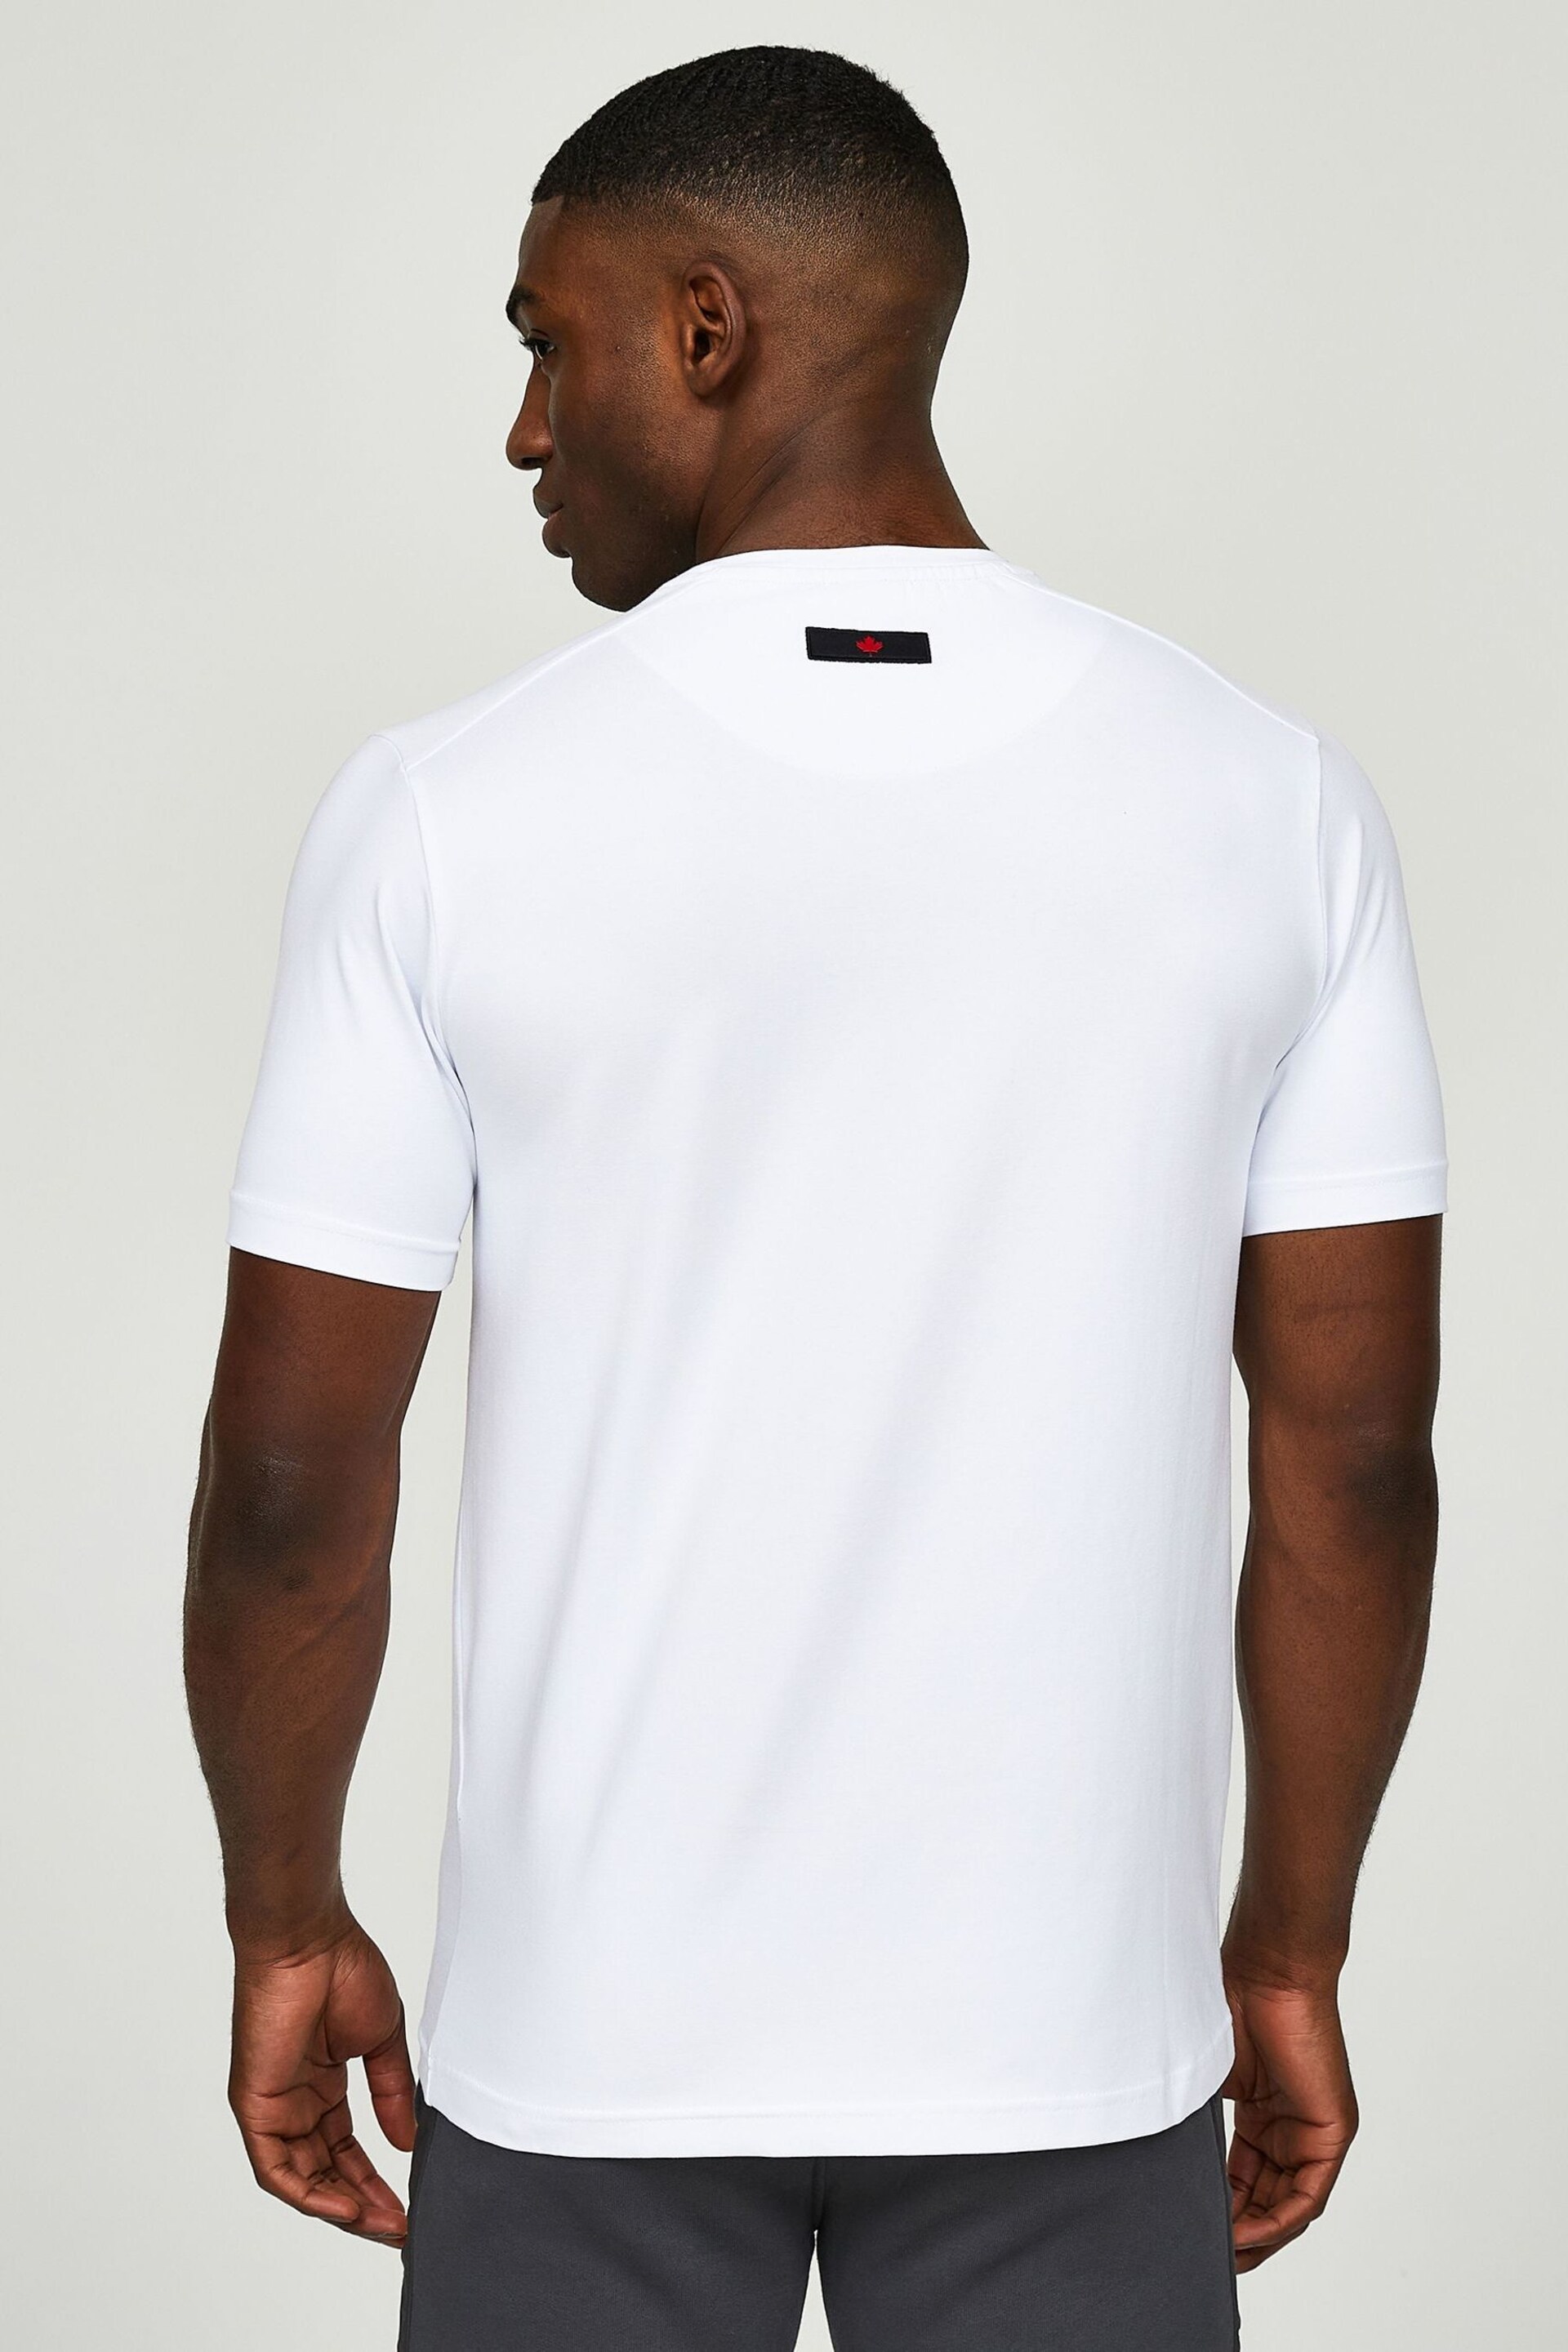 Zavetti Canada Botticini Reflective White T-Shirt - Image 3 of 6